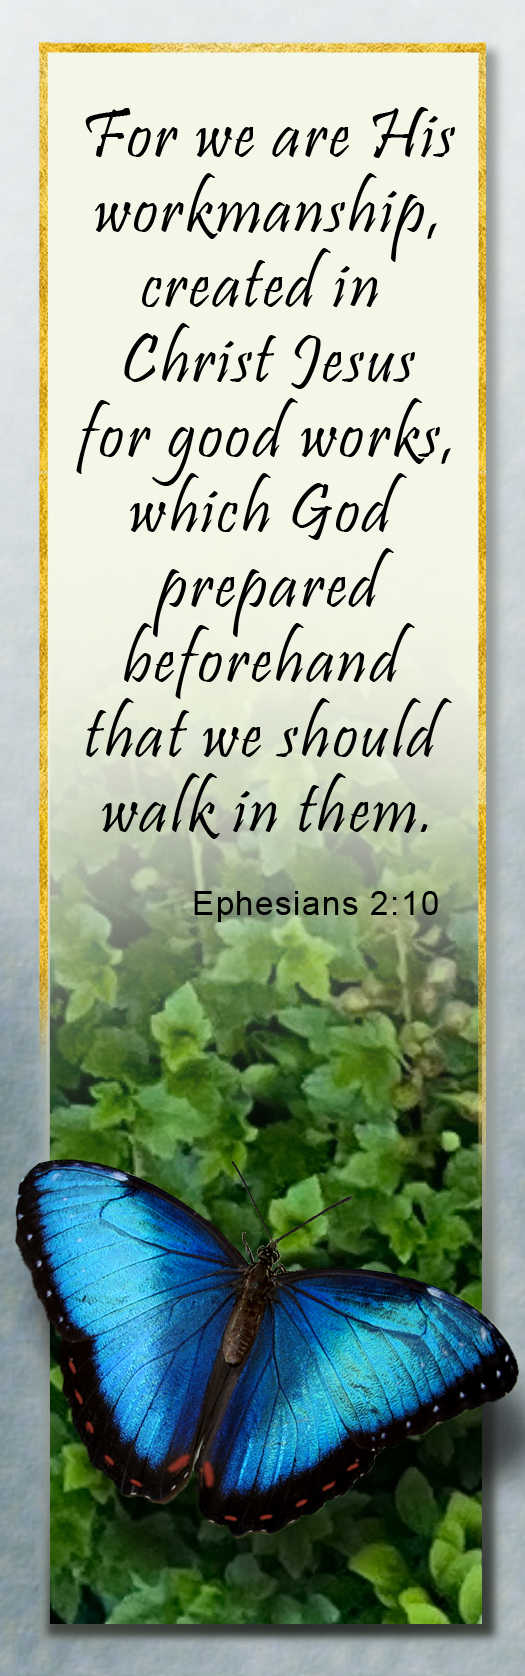 Workmanship - Epesians 2:10